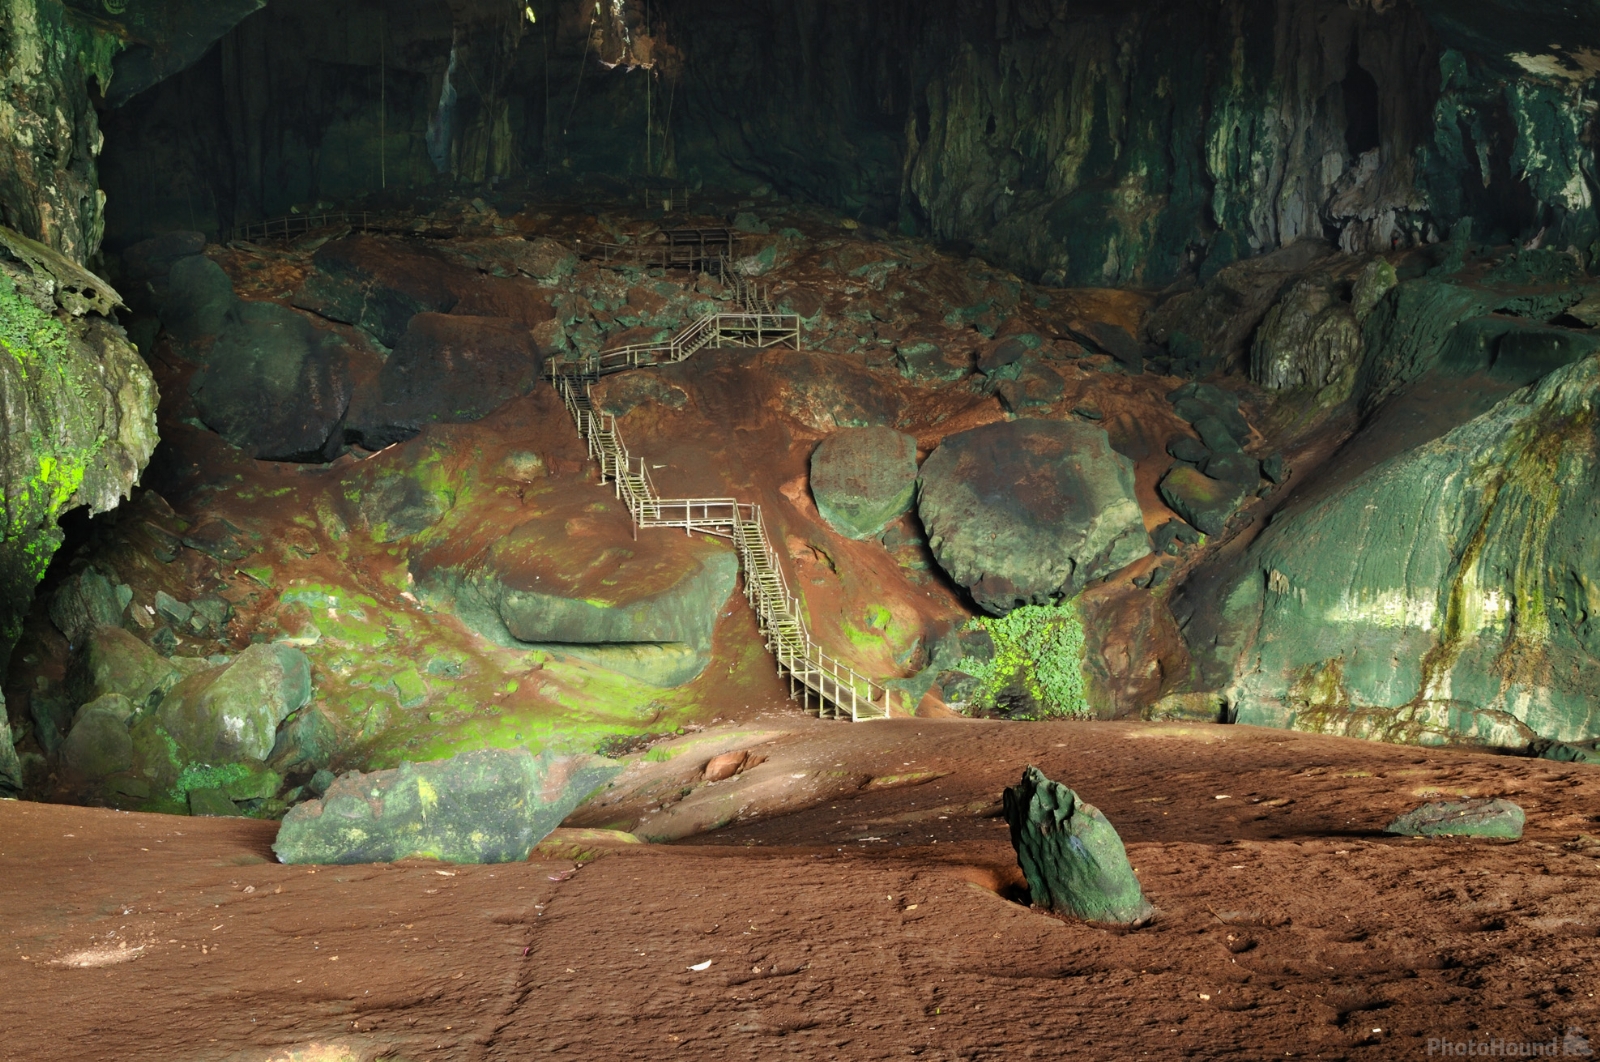 Image of Niah Caves National Park by Luka Esenko